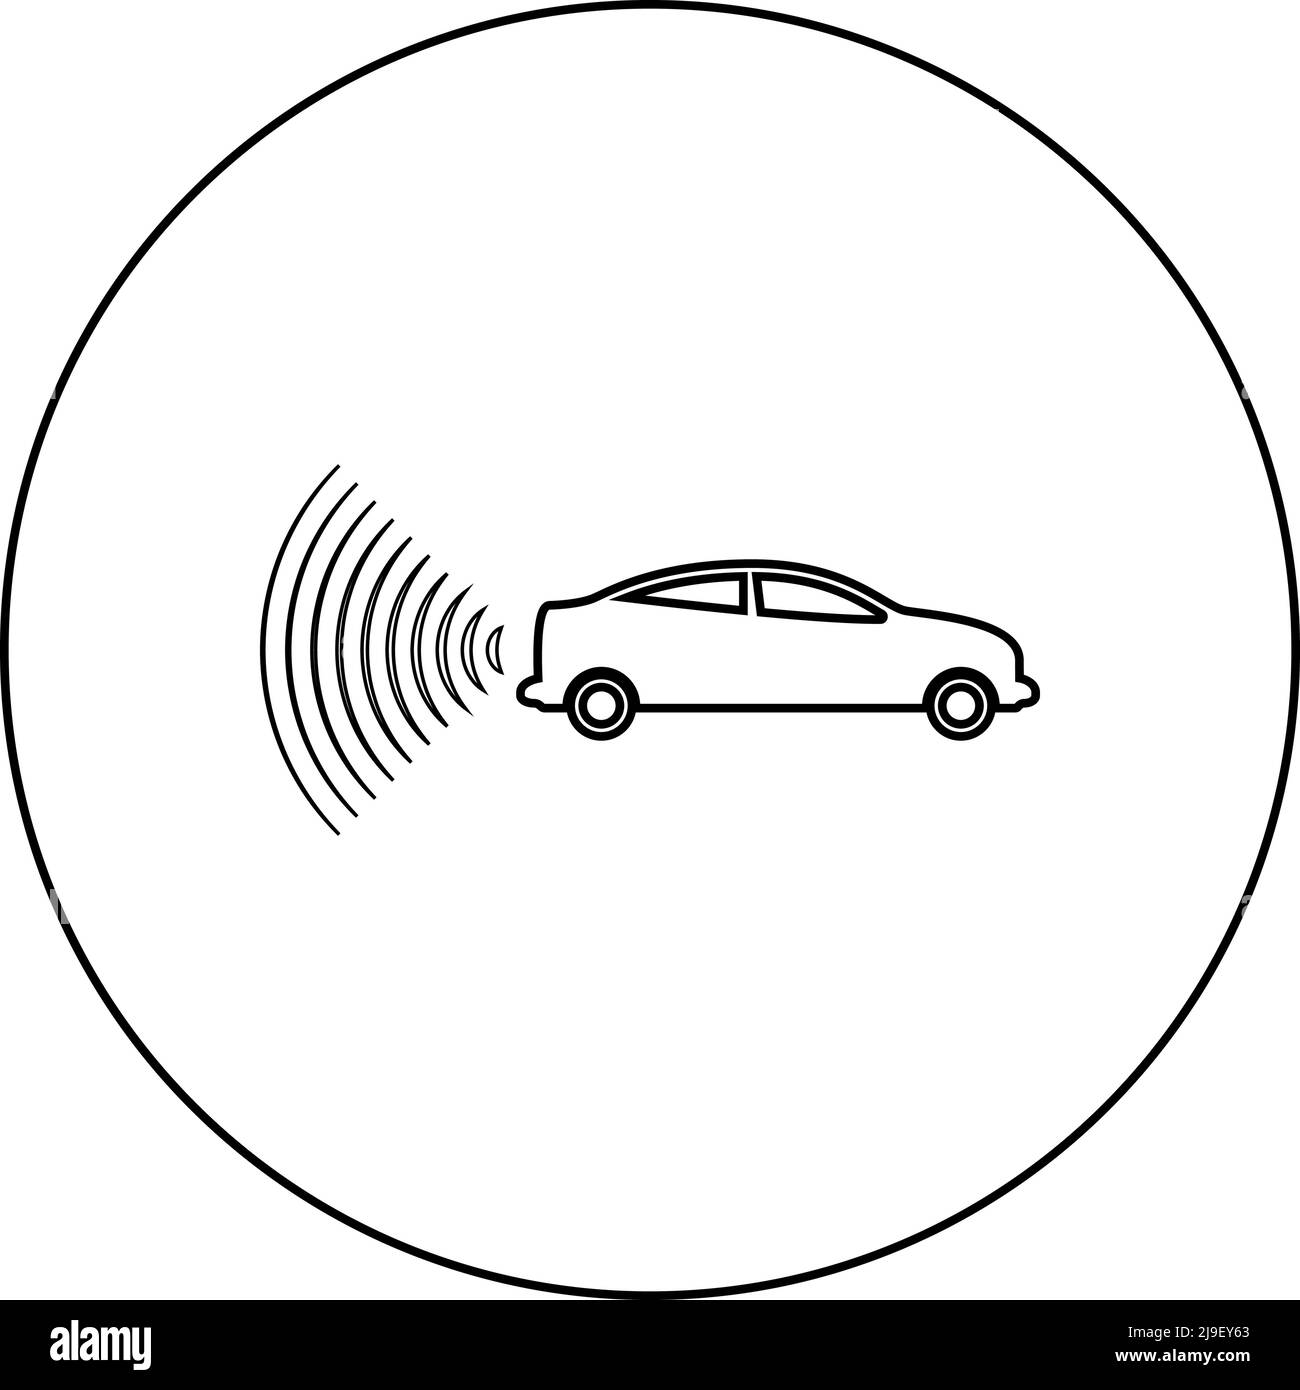 Car radio signals sensor smart technology autopilot back direction icon in circle round black color vector illustration image outline contour line Stock Vector